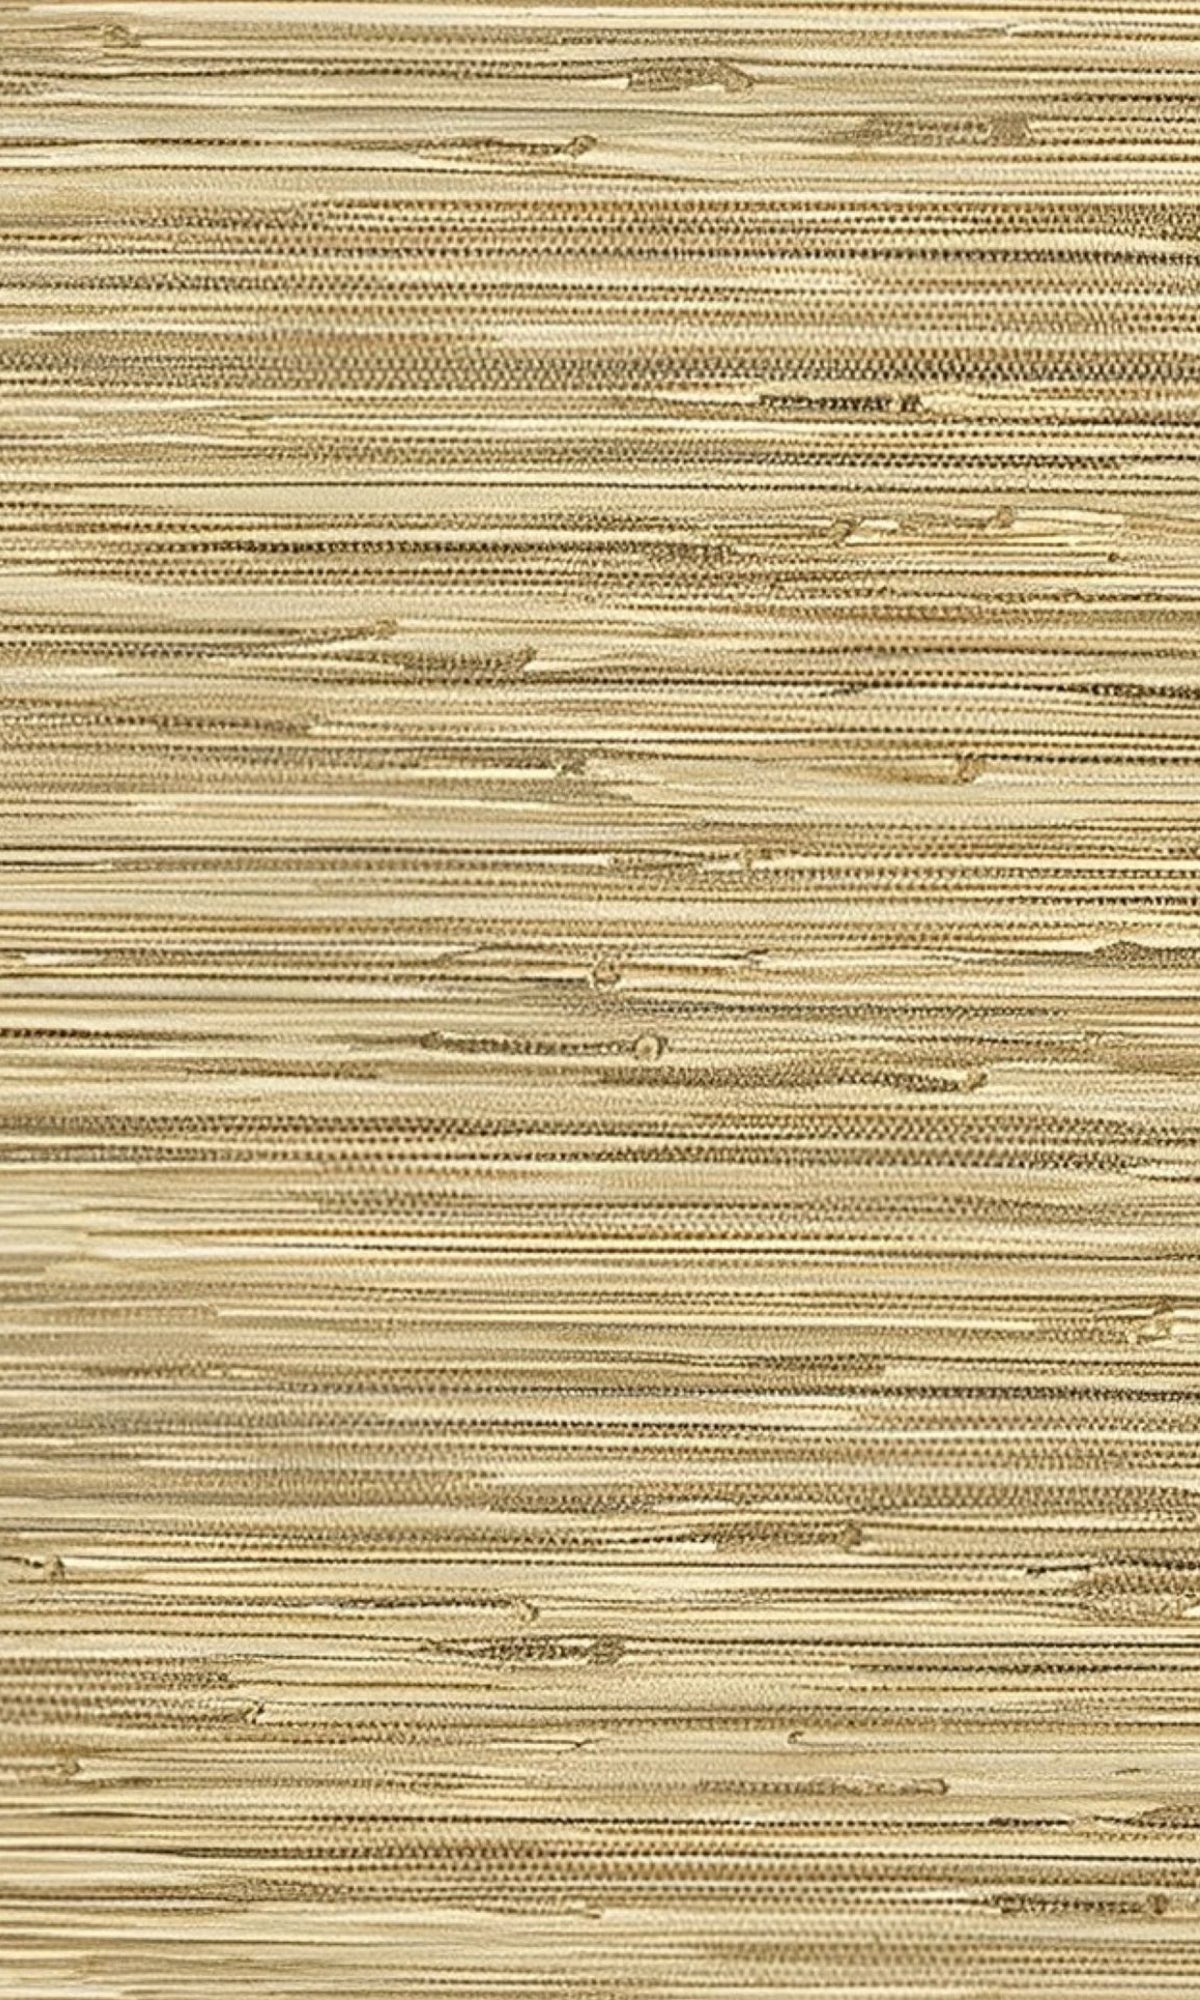 Grasslands Grasscloth Inspired Vinyl Commercial Wallpaper C7616